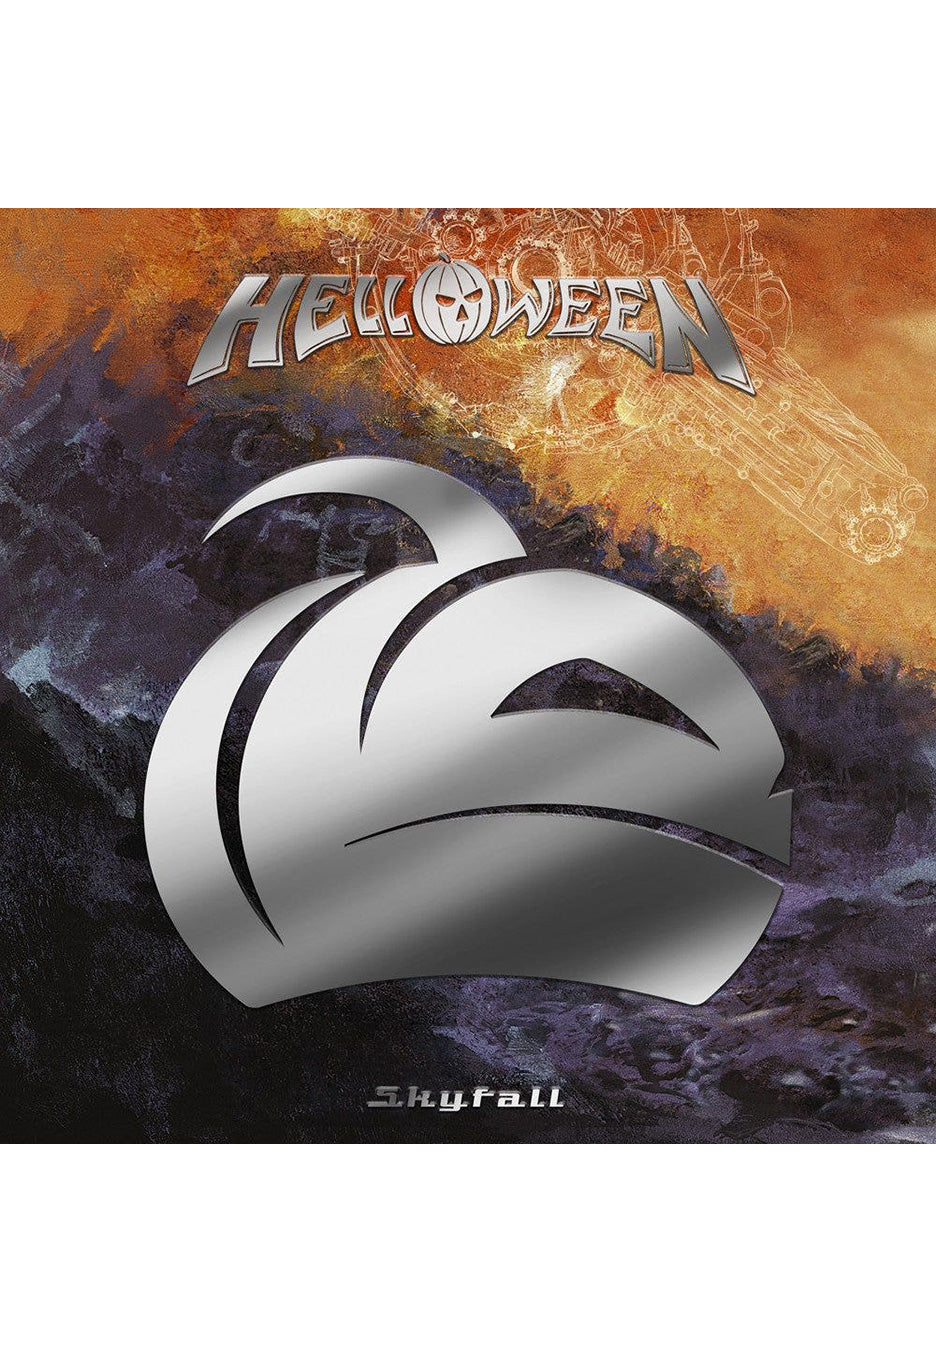 Helloween - Skyfall (Indestructible Version) Orange/White - Colored Mini Vinyl